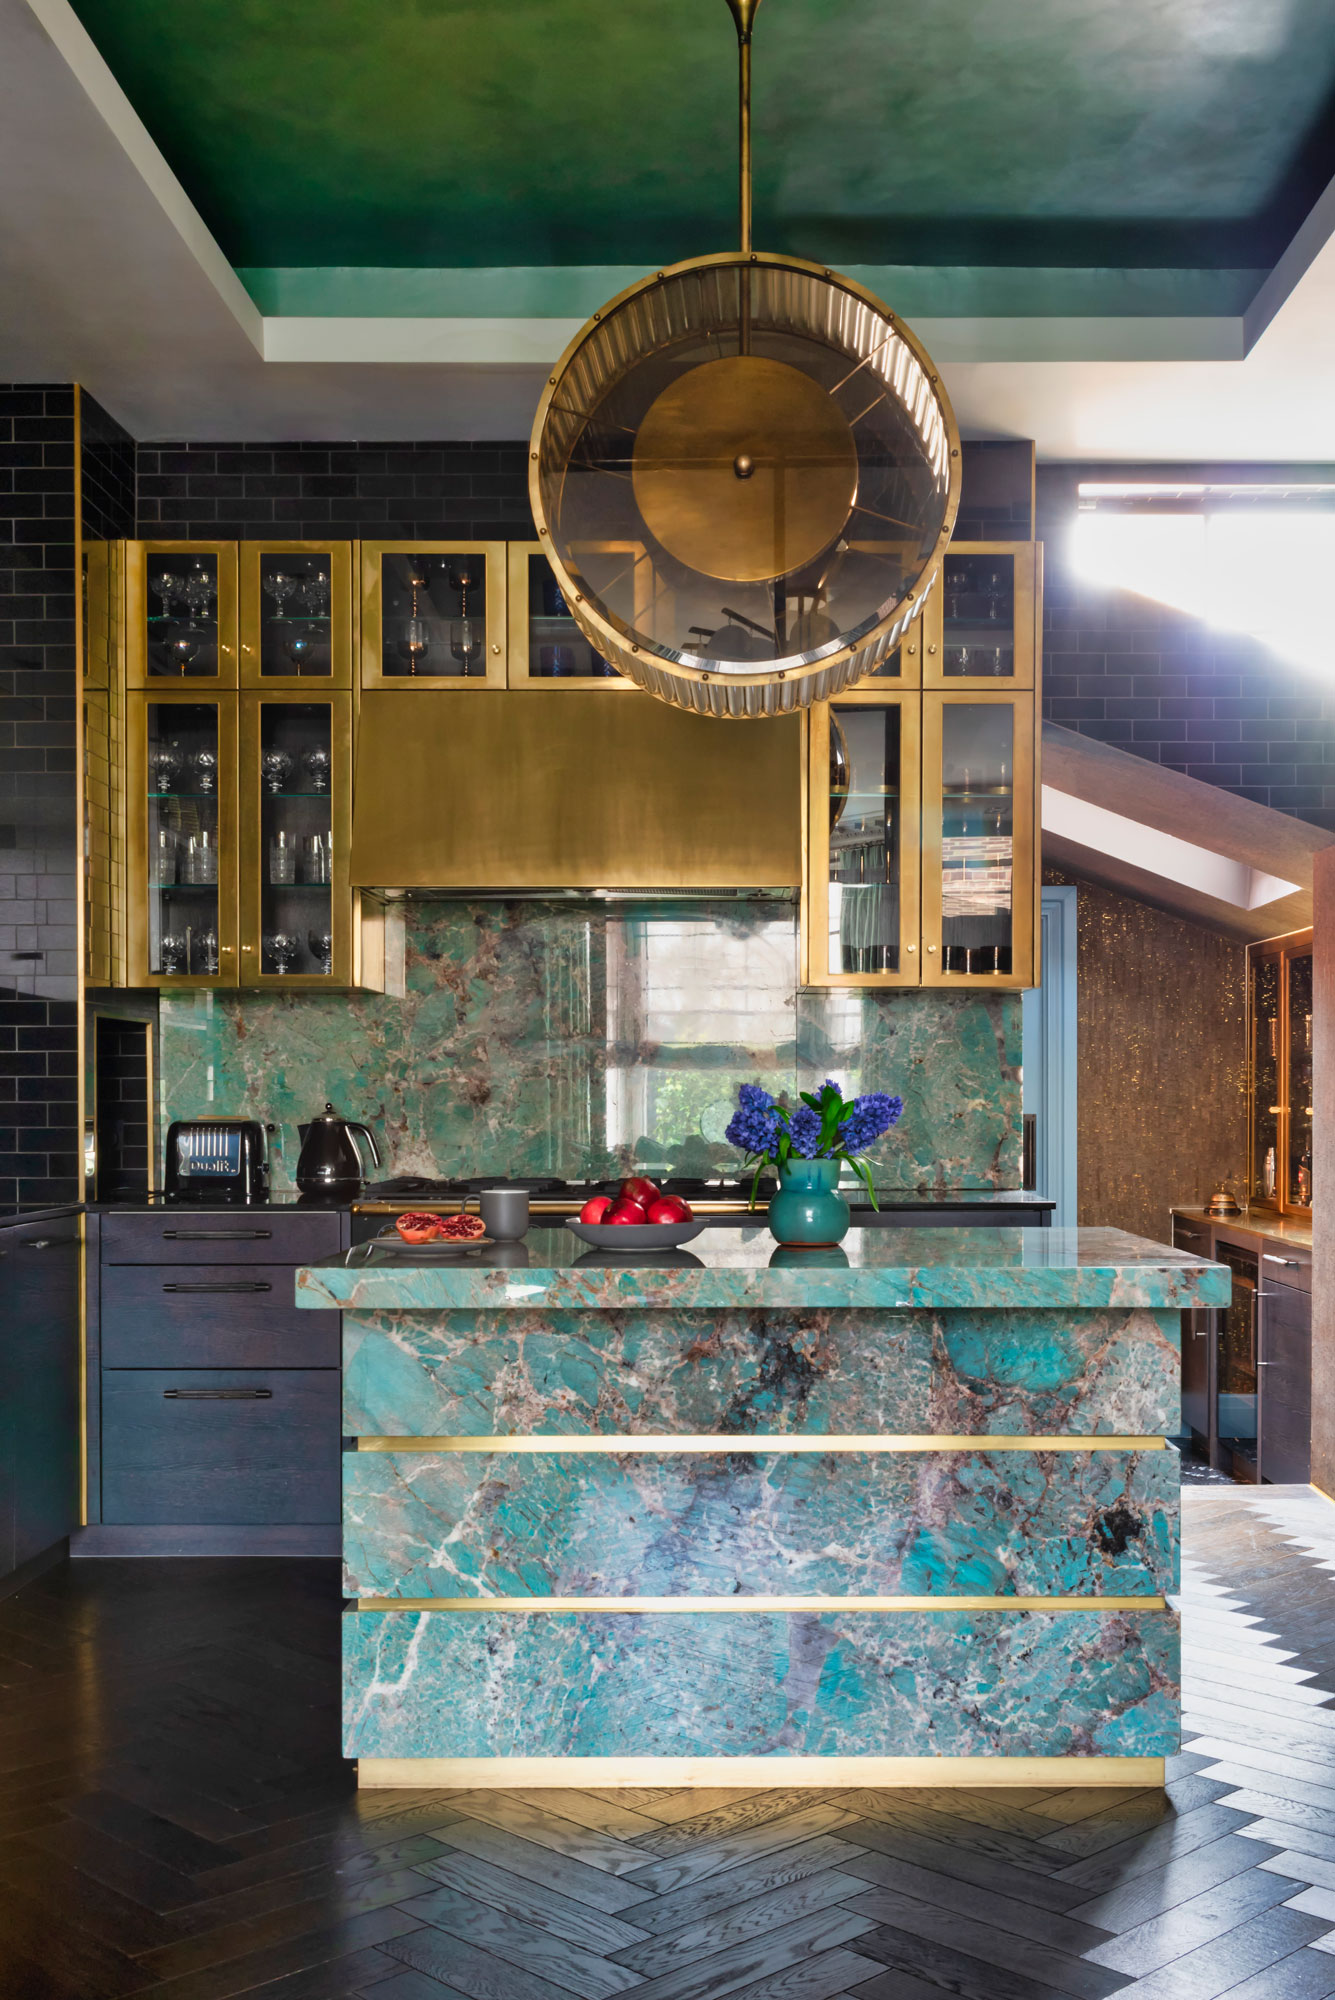 Kitchen detail - trilbey gordon interiors